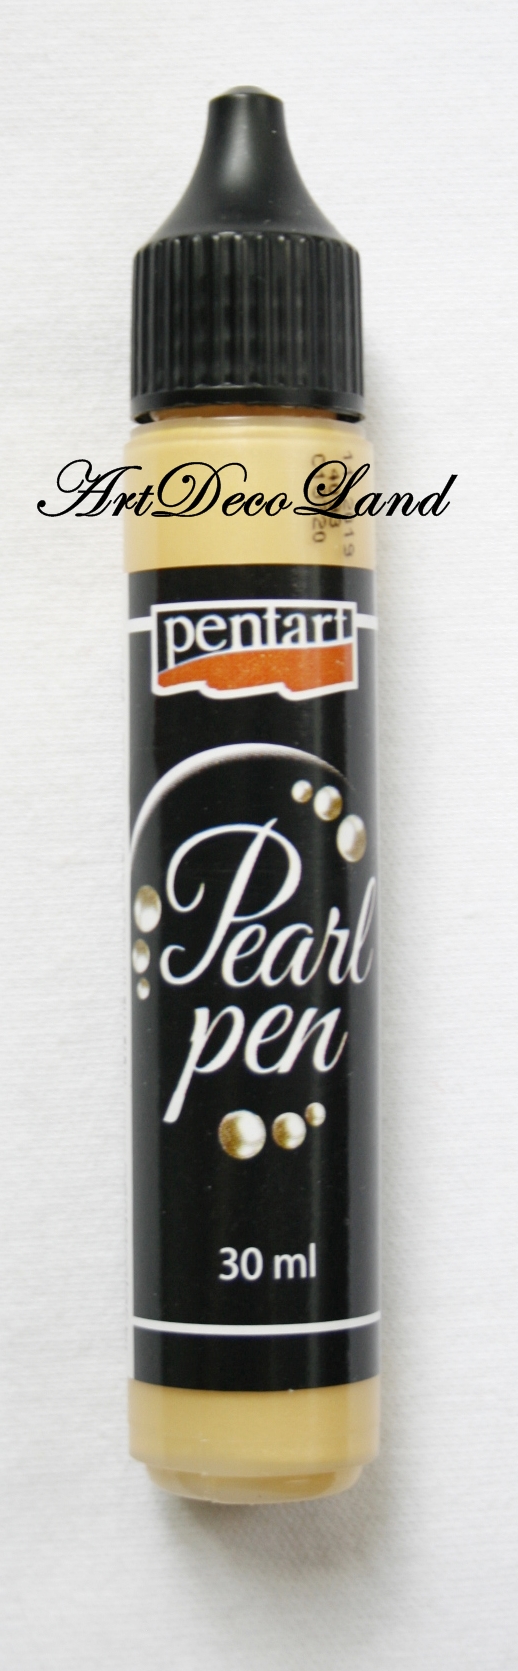 Pearl Pen - Gold